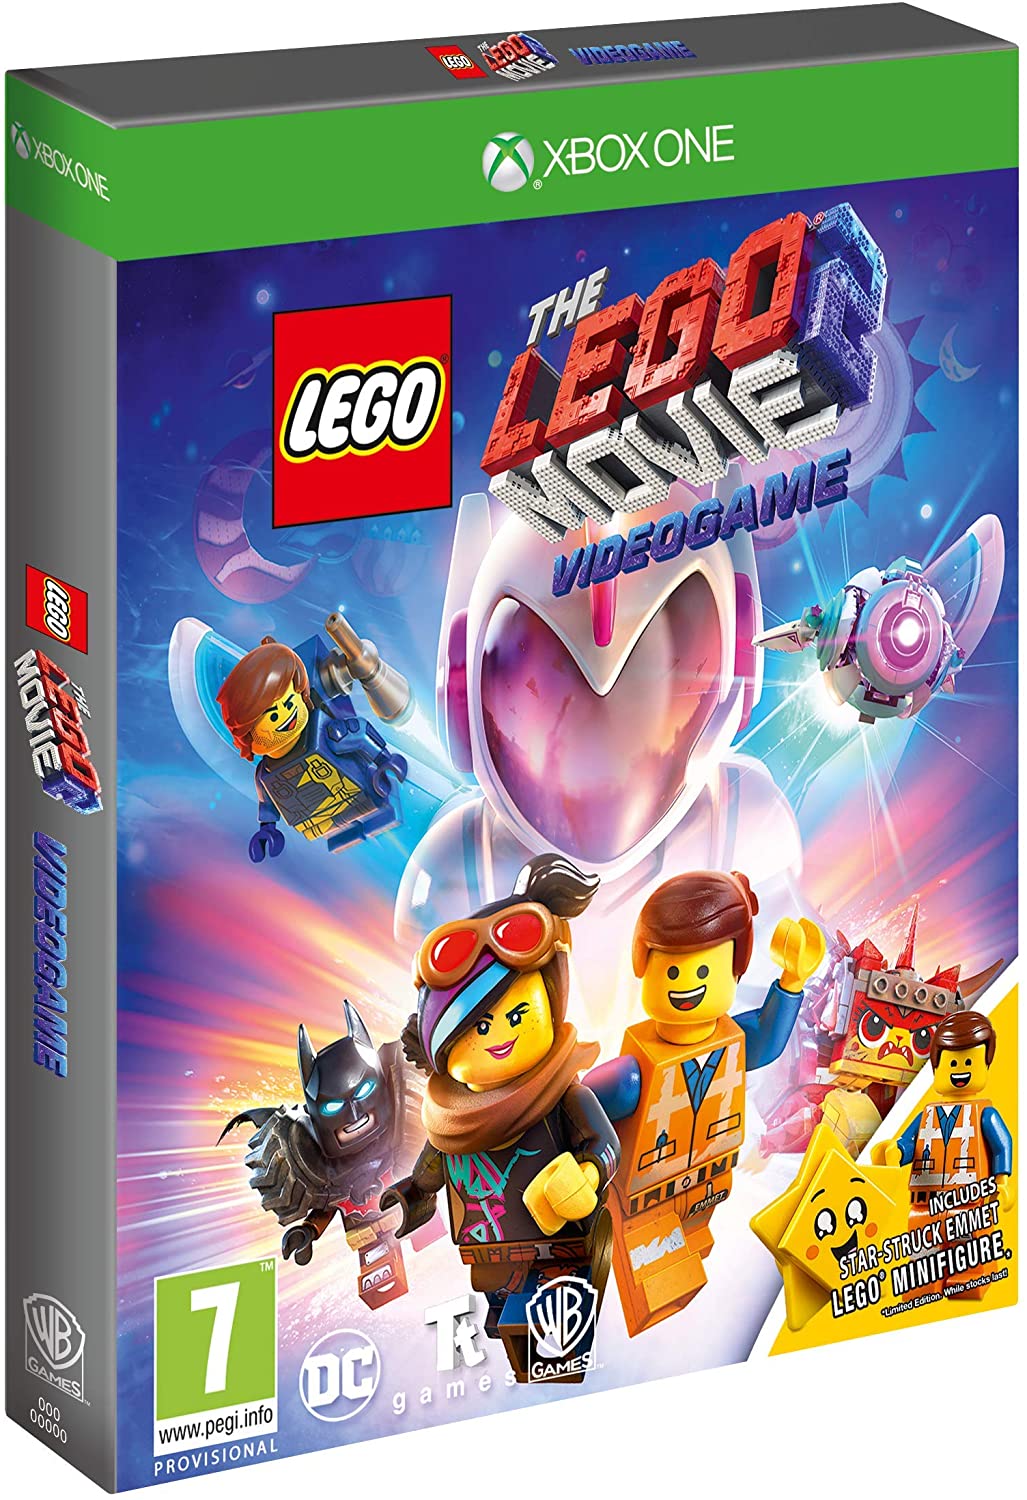 Die LEGO Movie 2 Videogame Minifigure Edition (Xbox One)